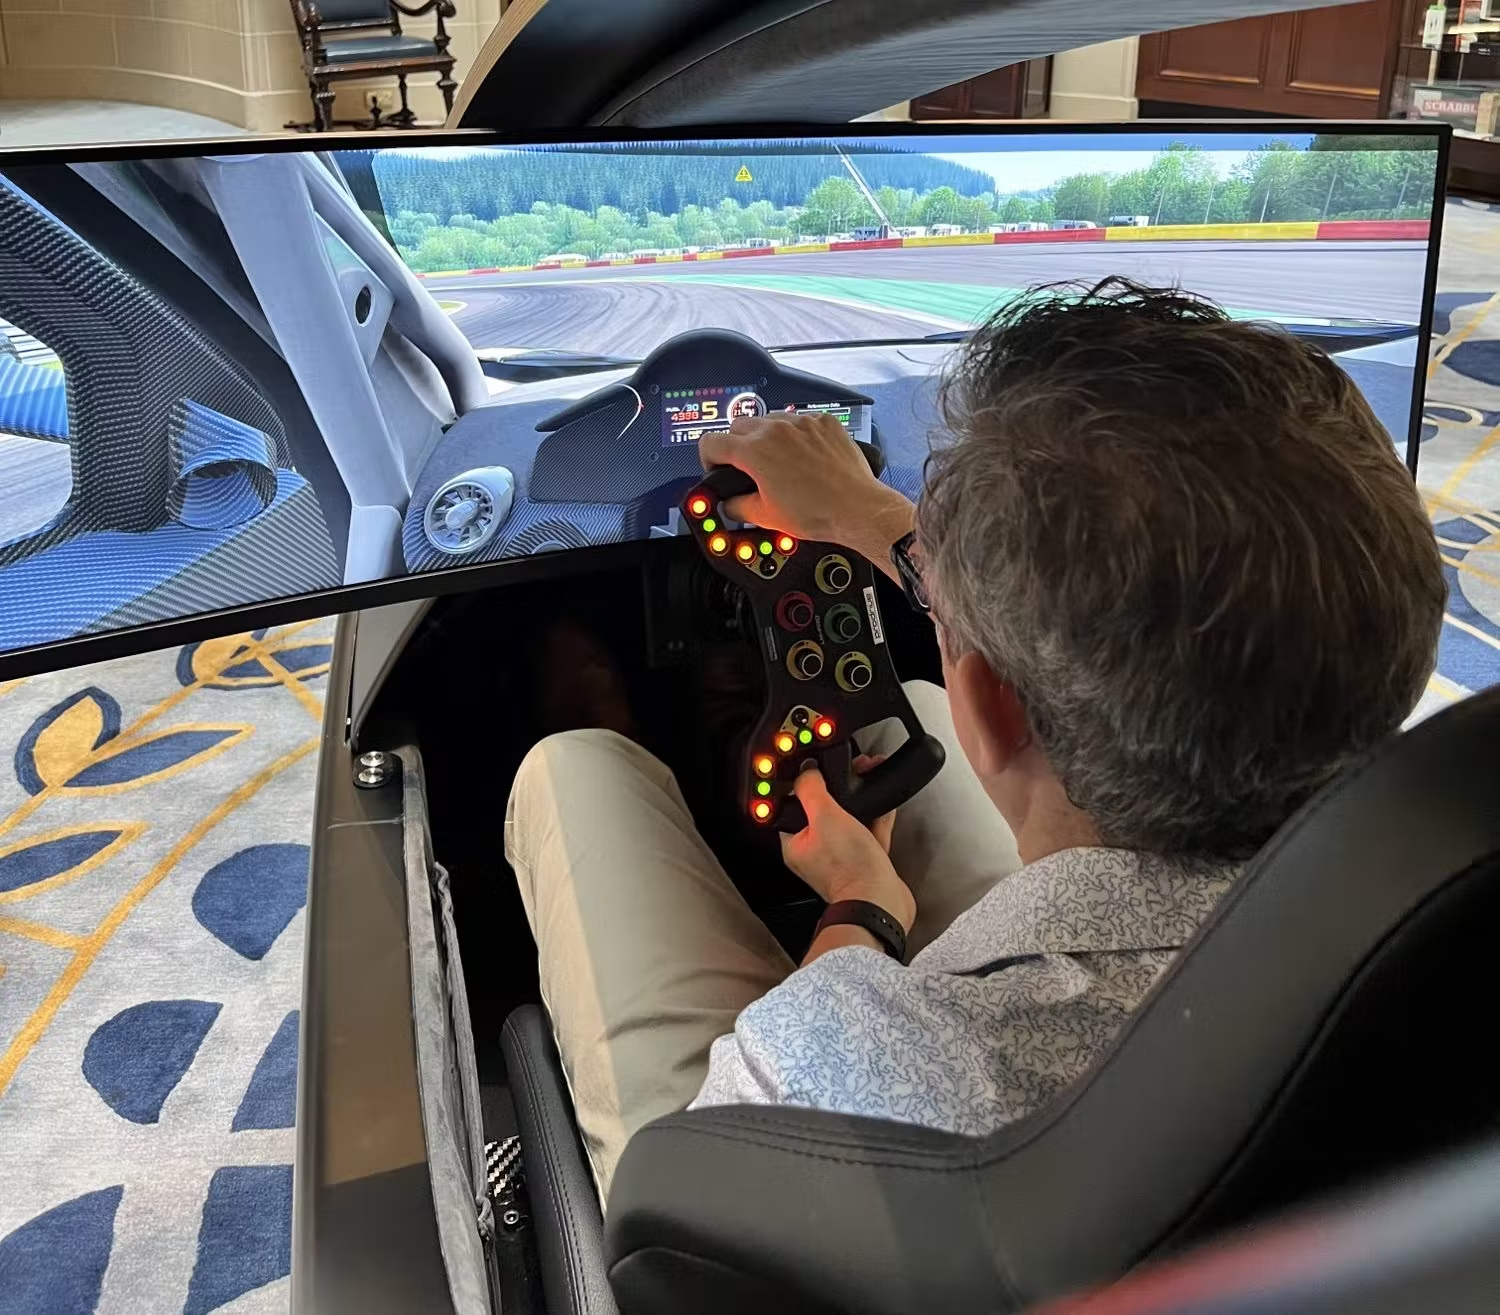 I drove Prodrive’s £40,000 simulator for the super-yacht crowd